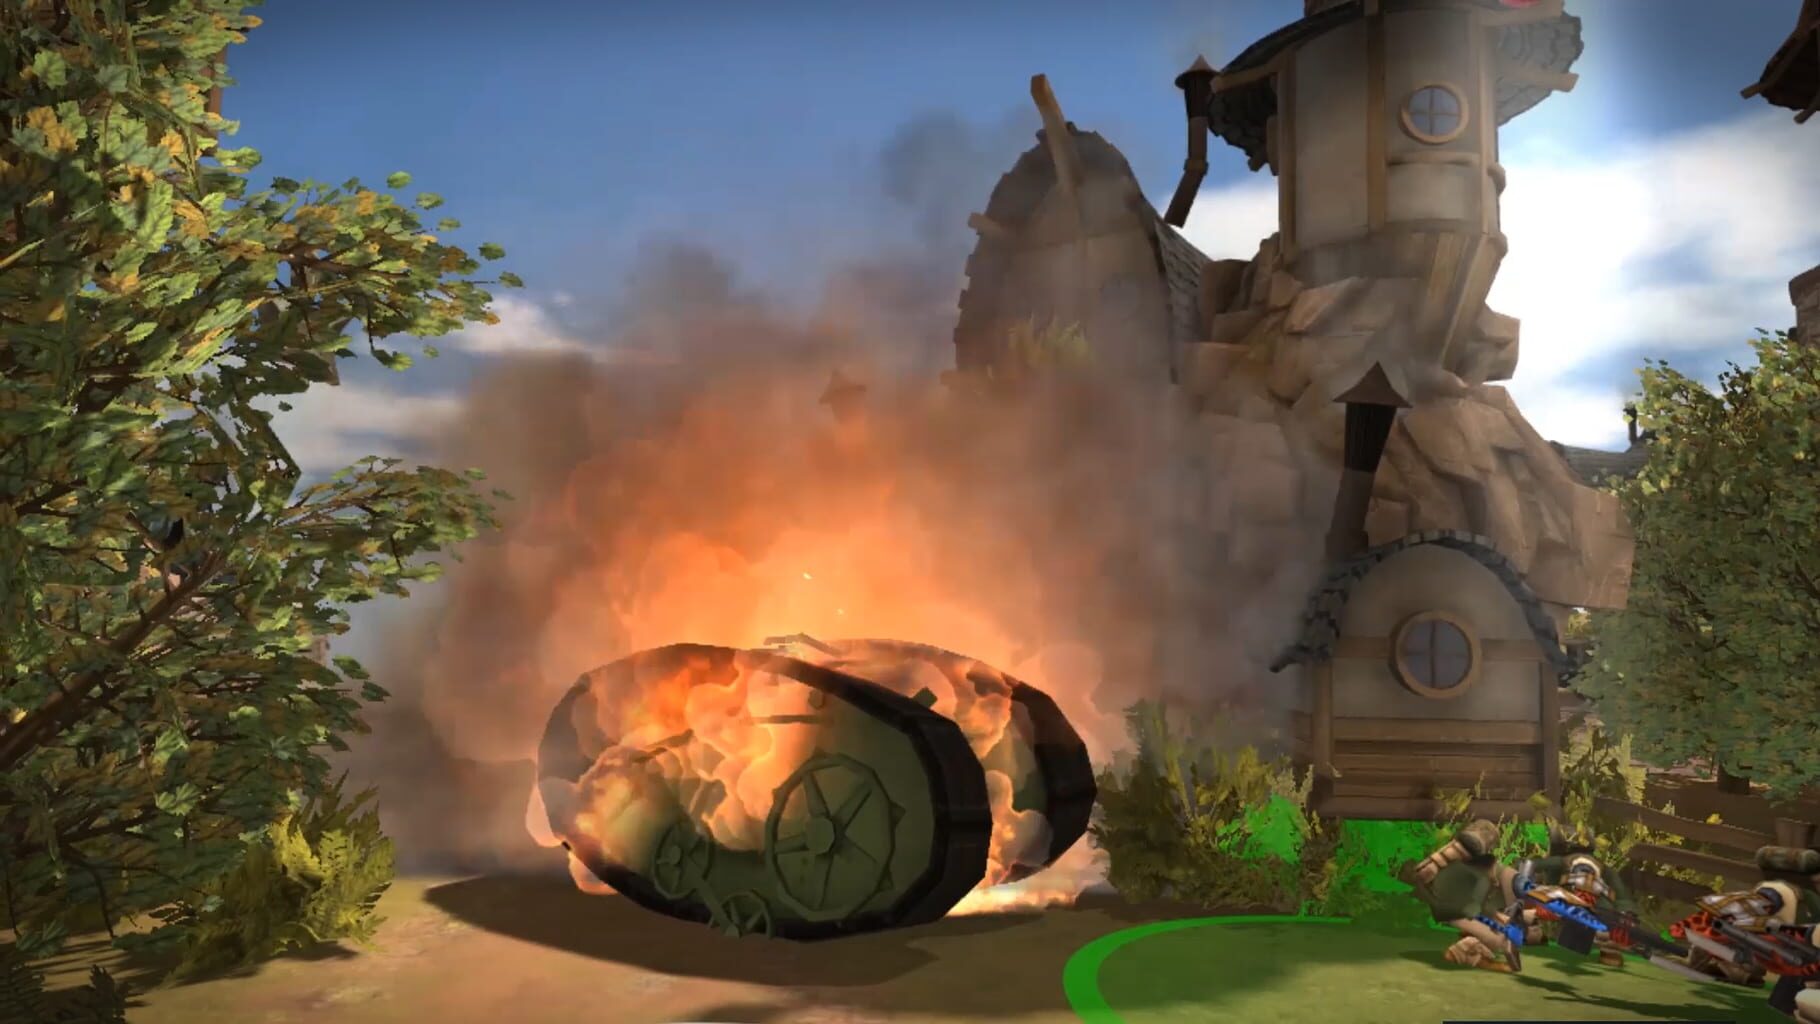 Captura de pantalla - Quar: Battle for Gate 18